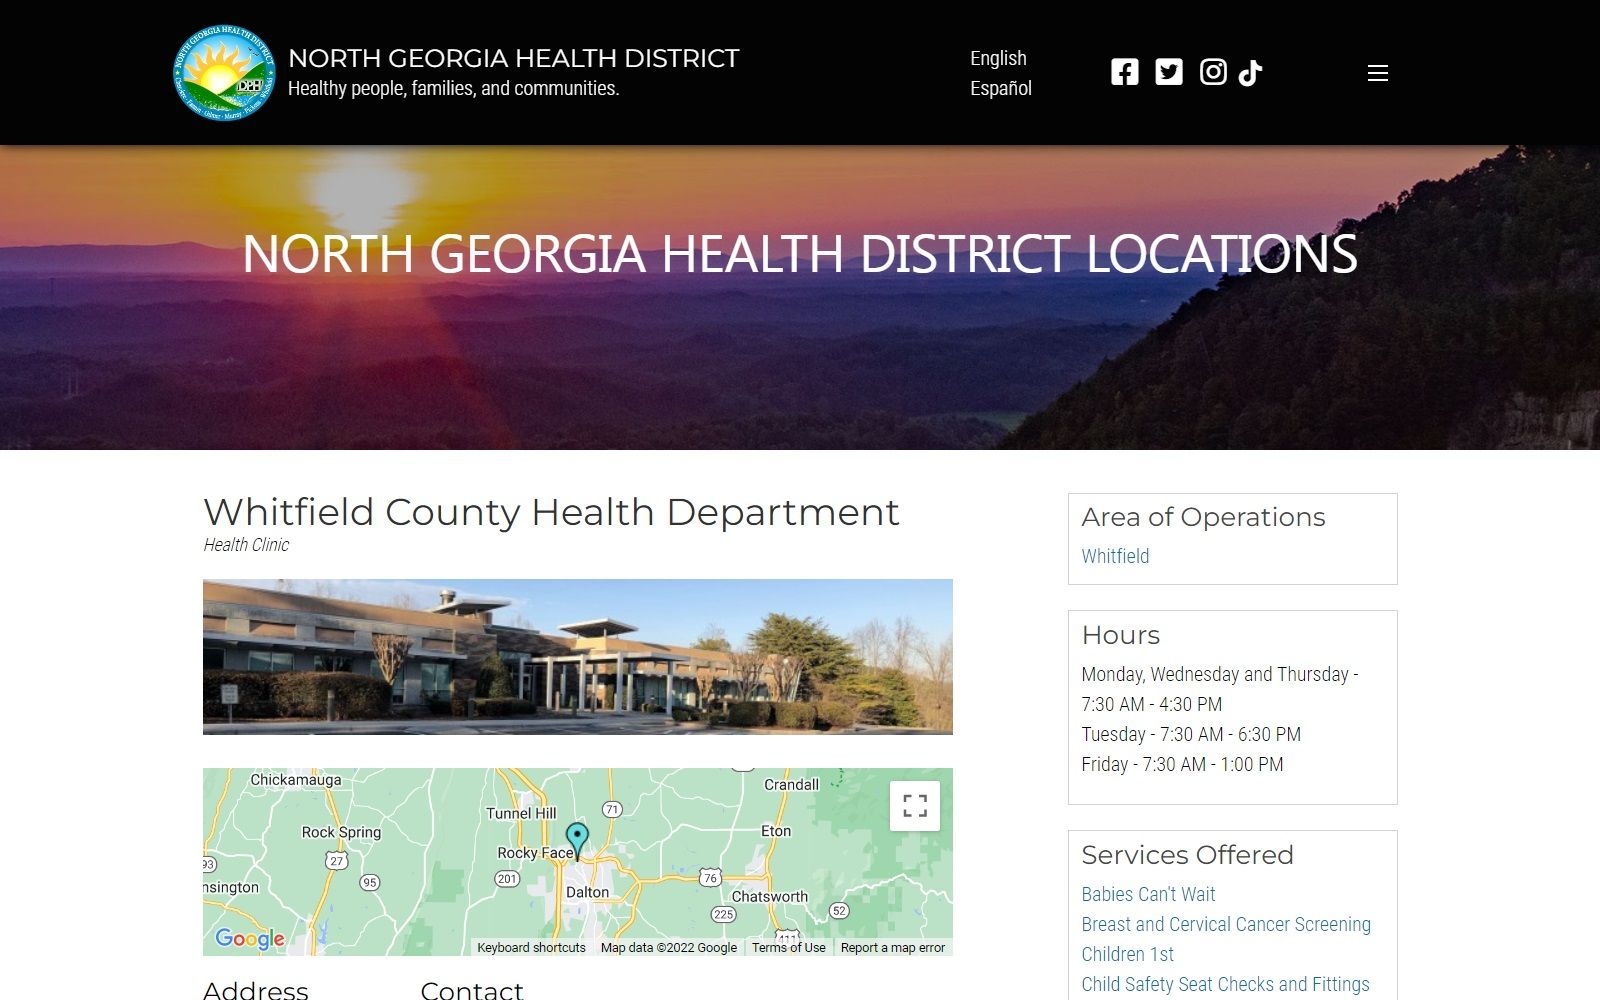 nghd.org_nghd-locations-listing_item_dalton-clinic